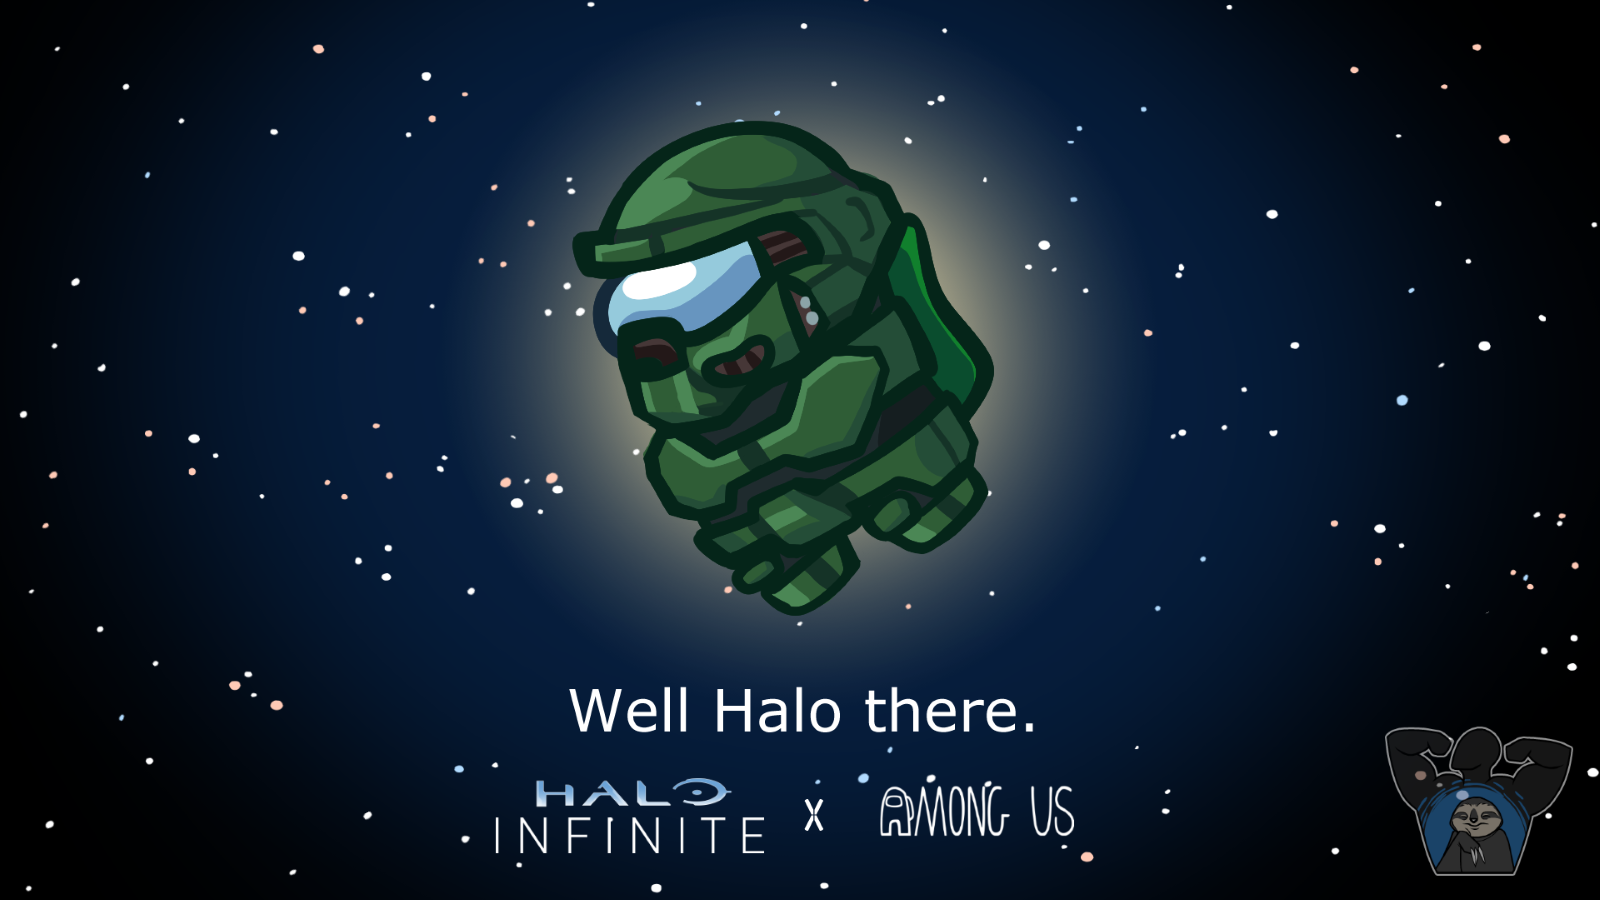 Key image for Halo Infinite x Among Us partnership